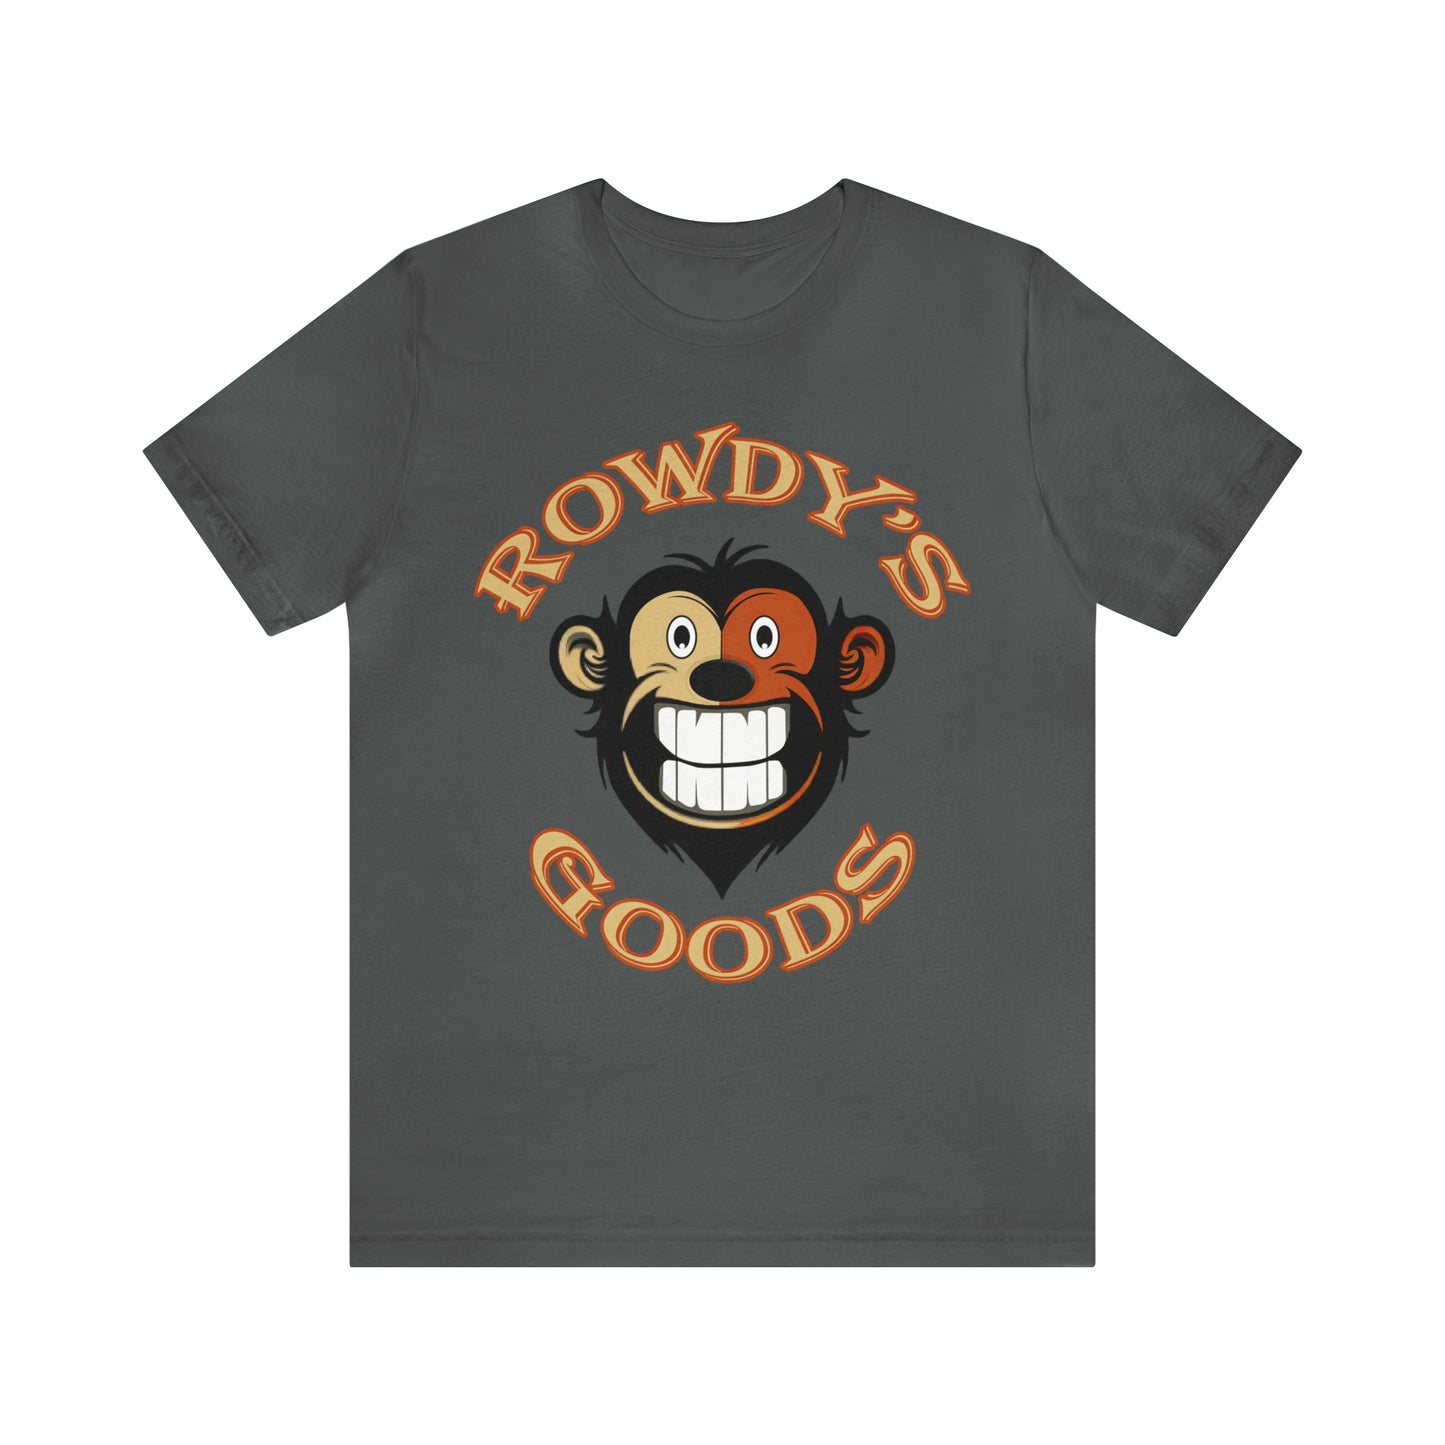 Rowdy's Goods - Original Brand T-Shirt